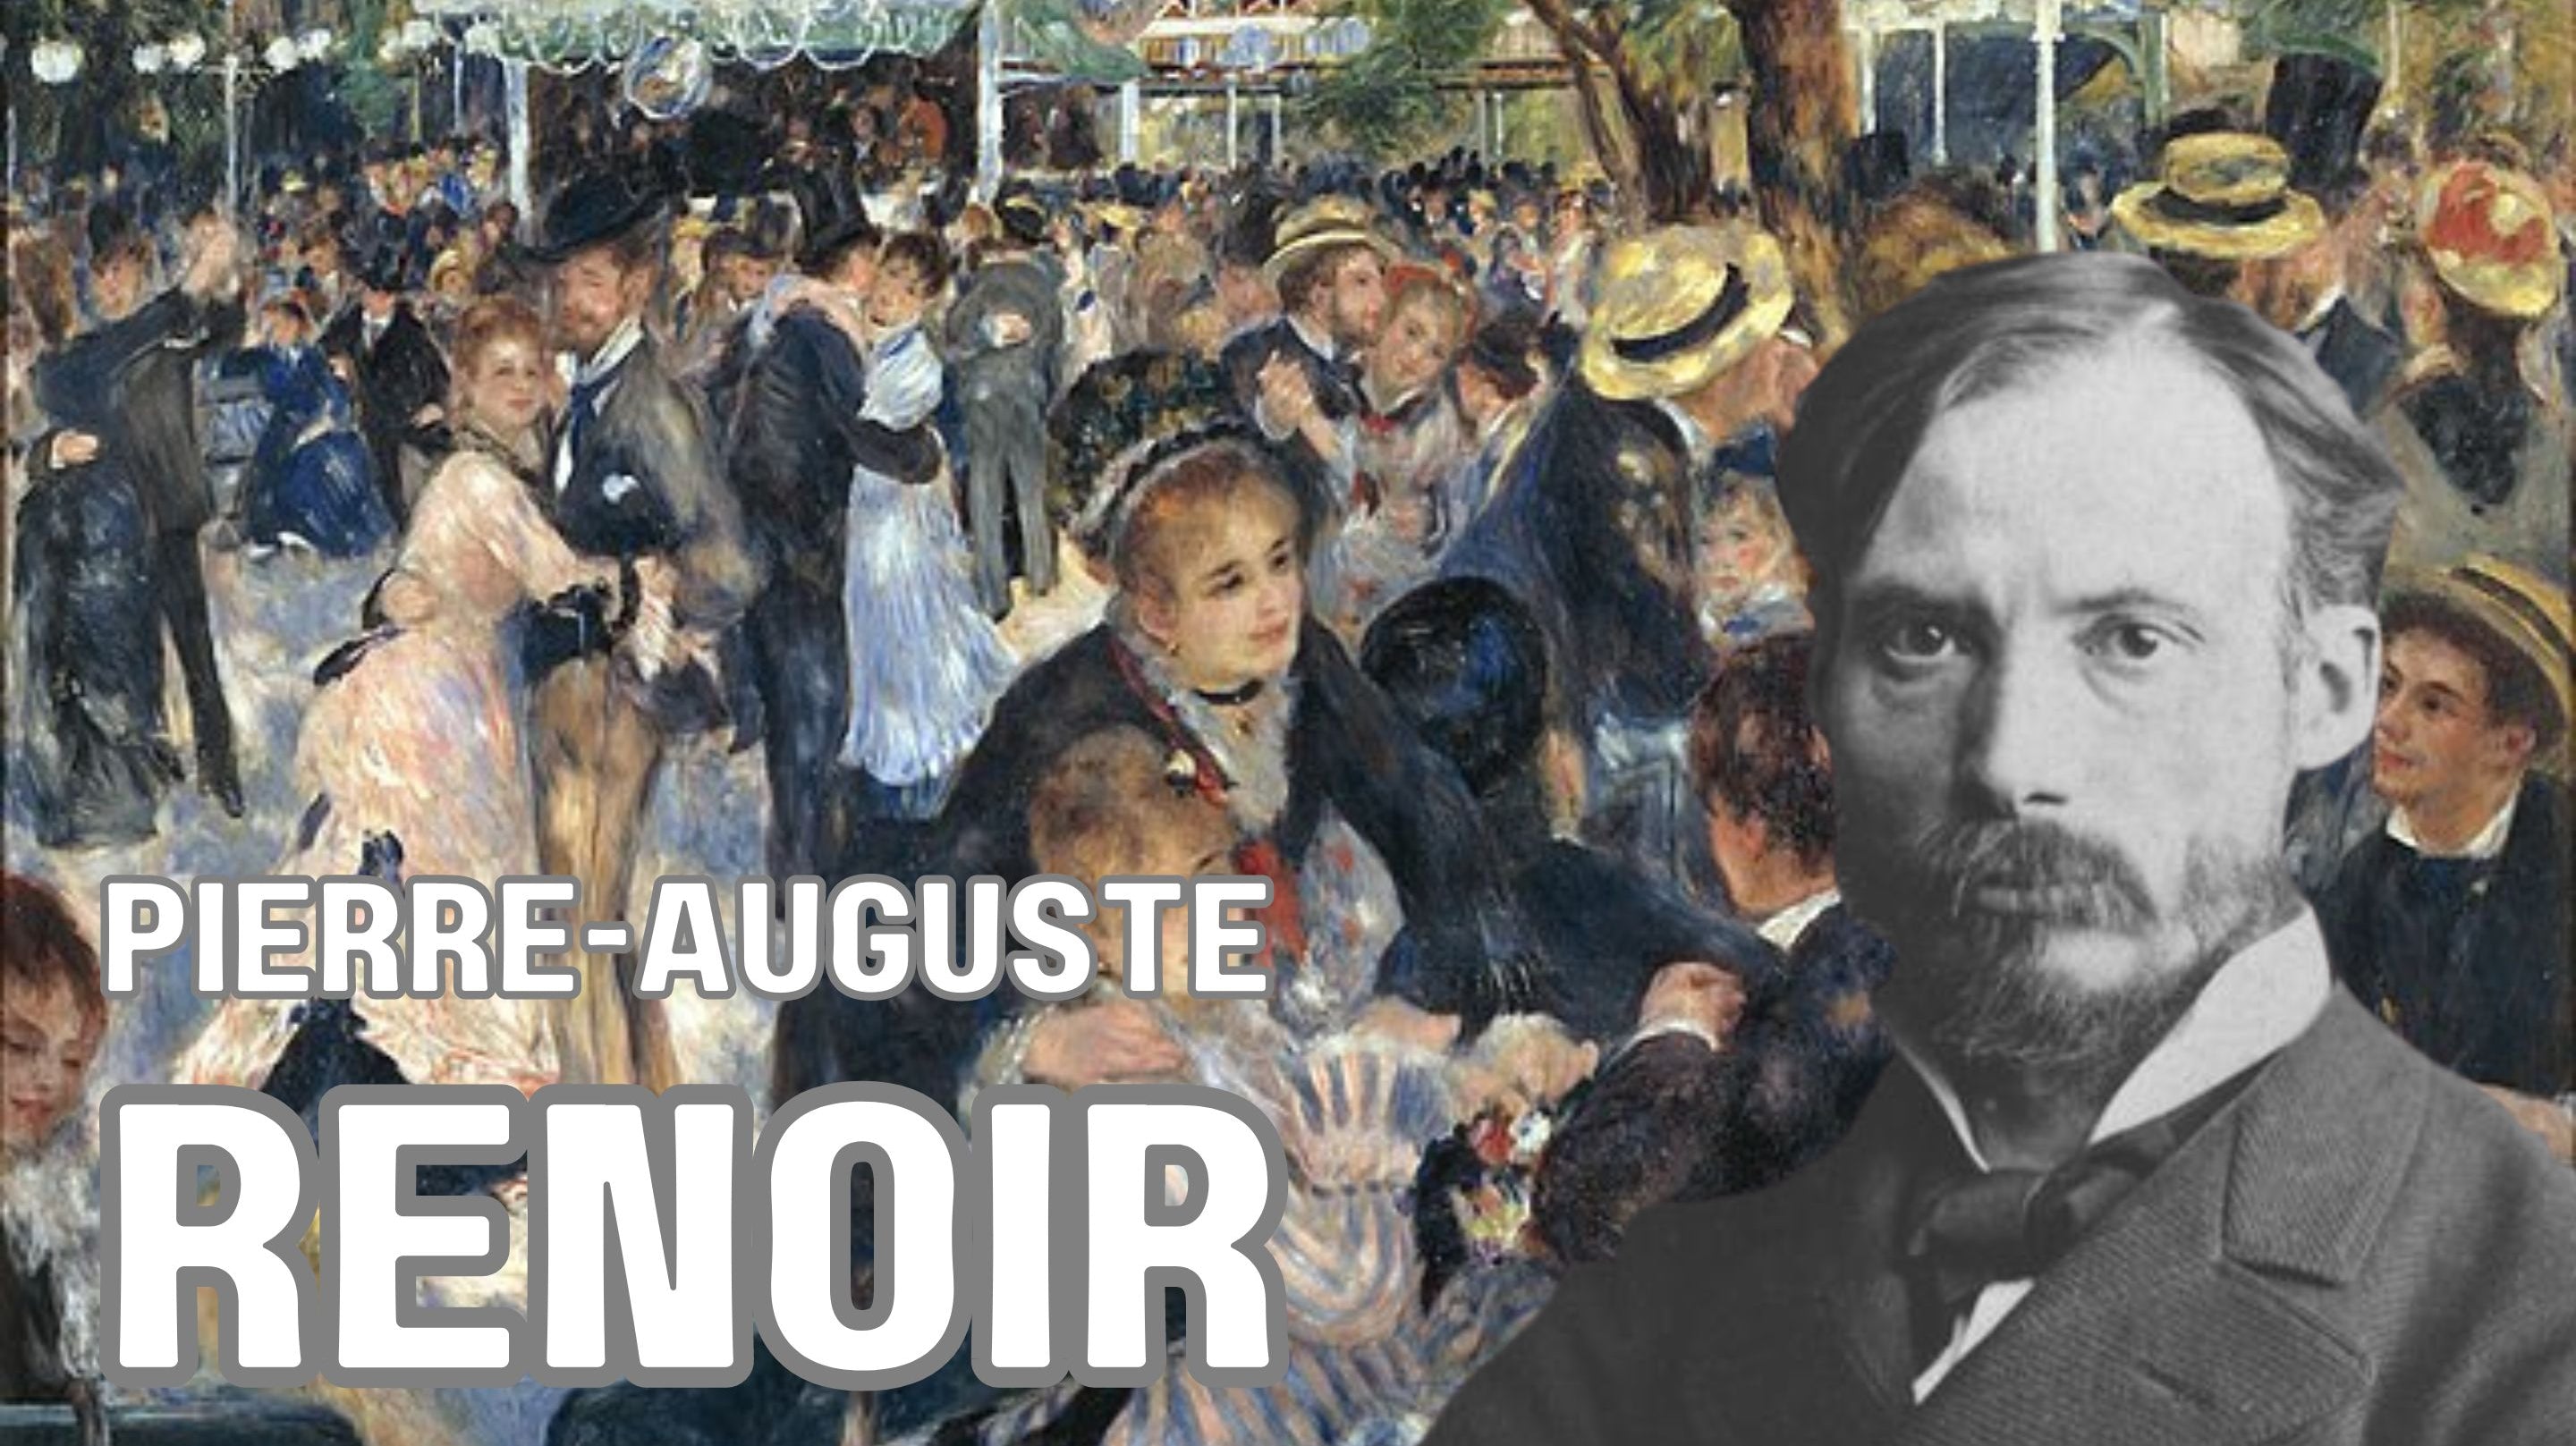 Piere-Auguste Renoir - A Timeless Impressionist Master